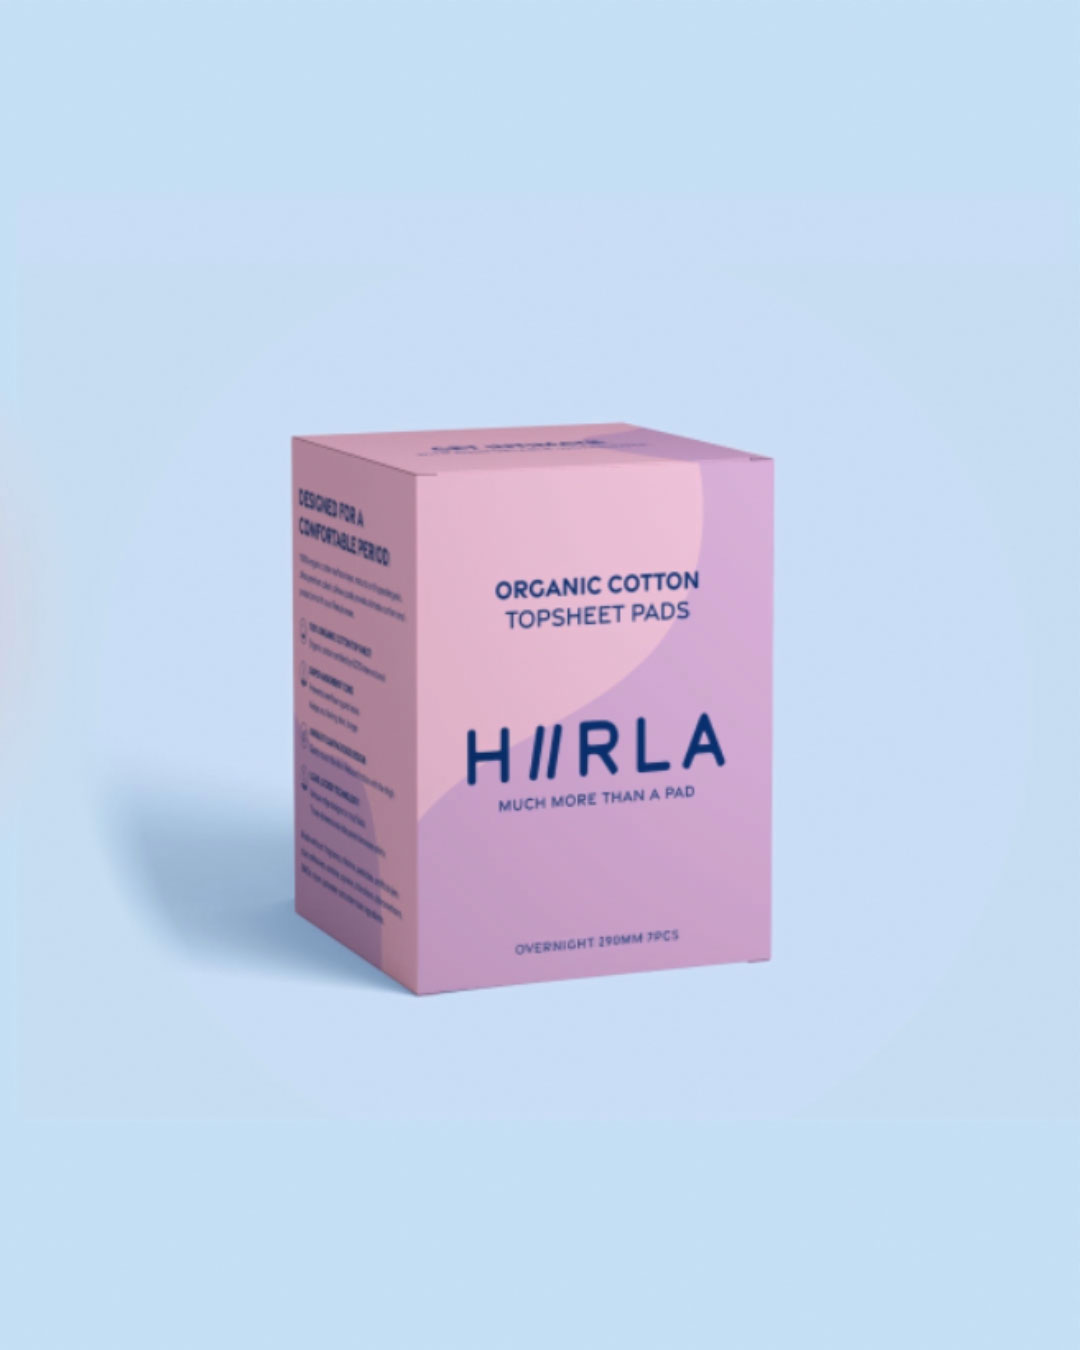 HiirLa sanitary pad packaging design by NP Creative